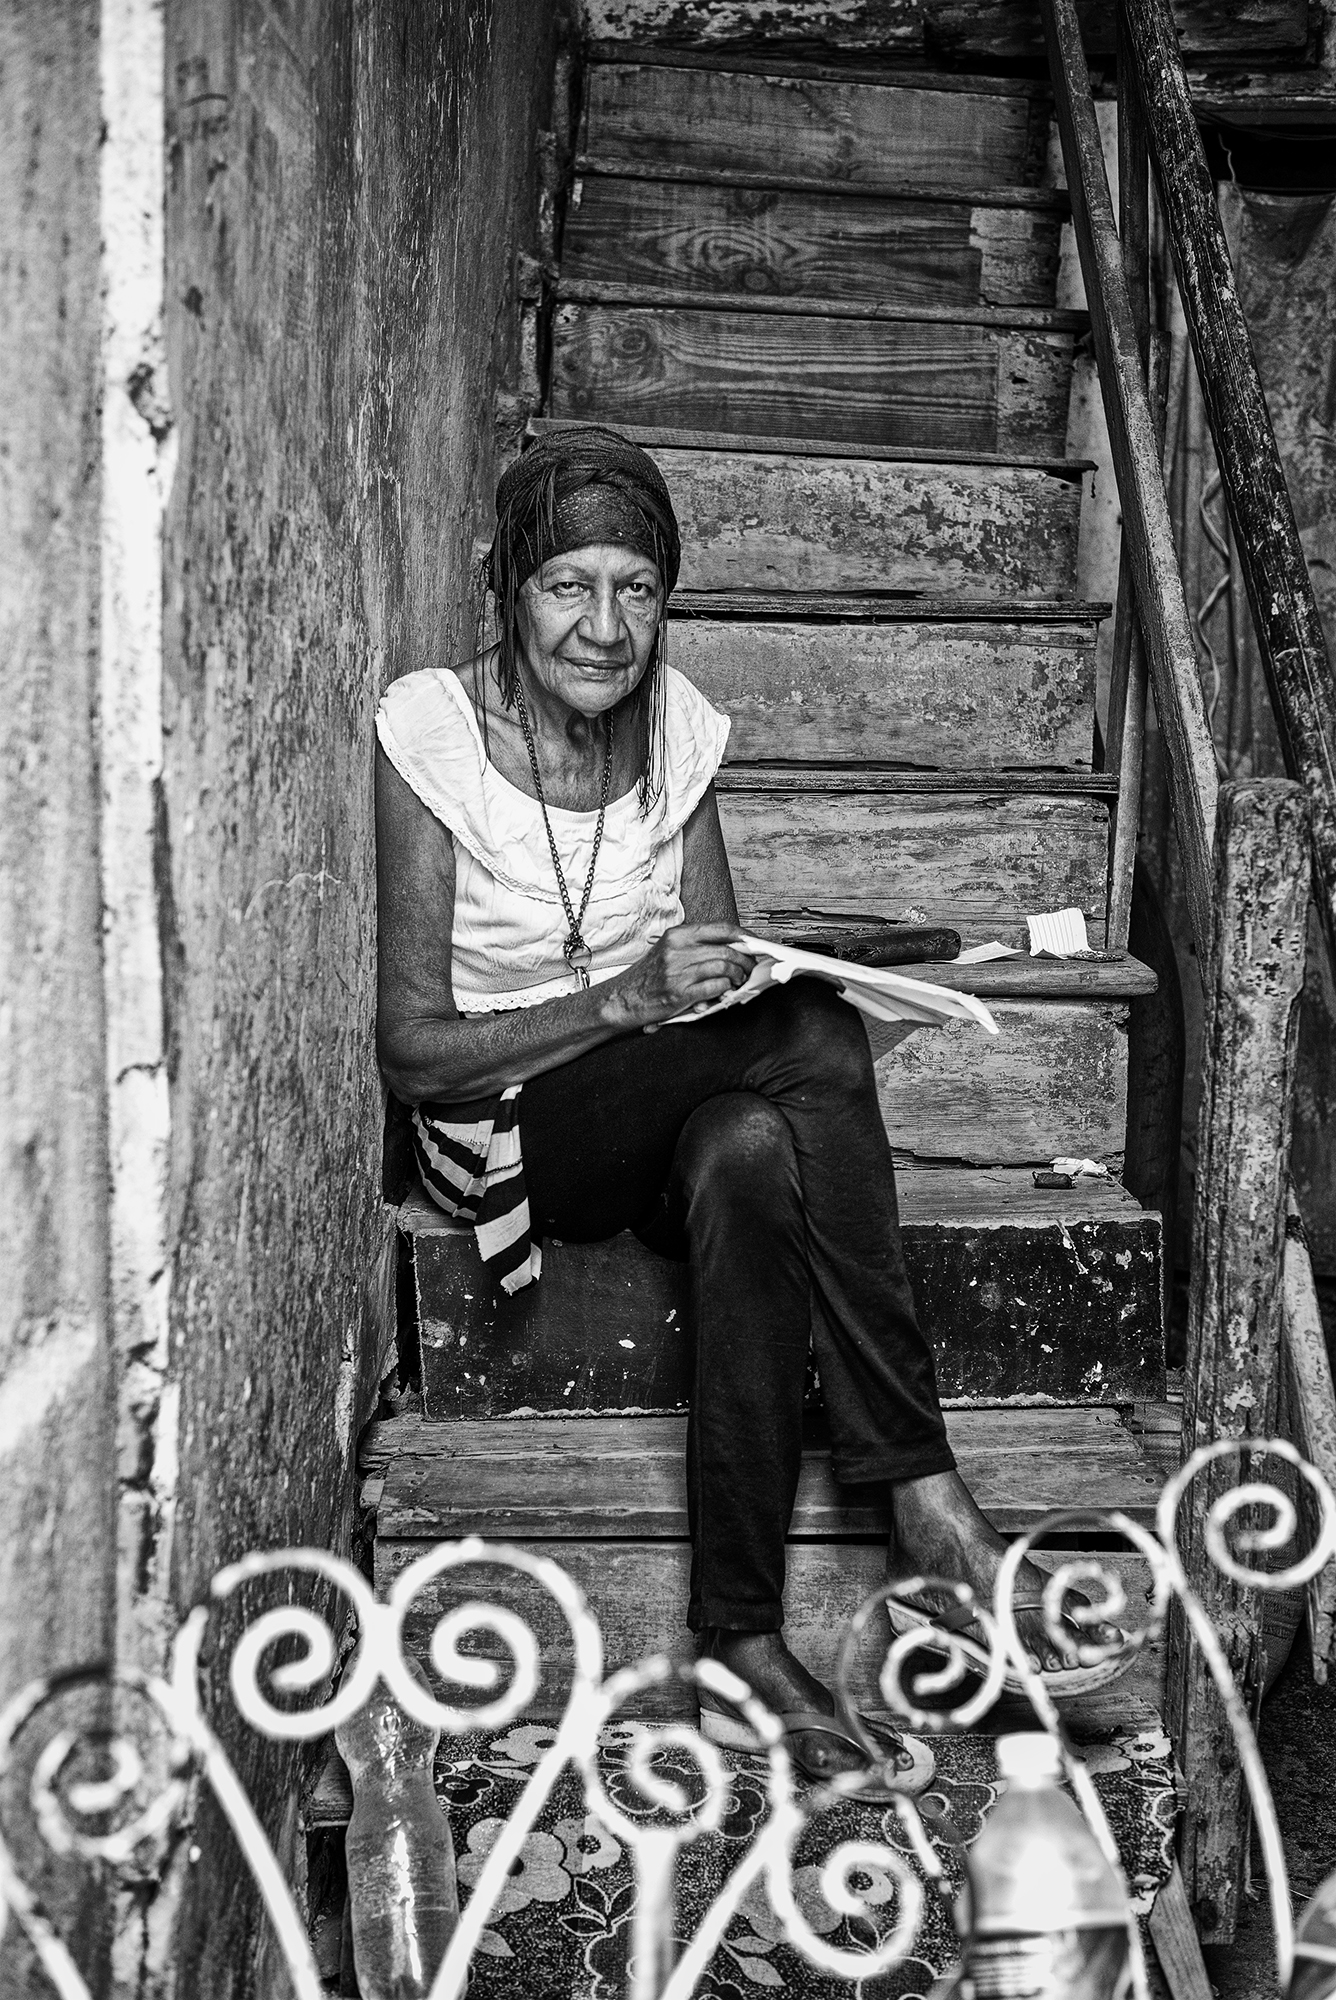 Melinda Green Harvey: The Woman on the Stairs - Havana, Cuba